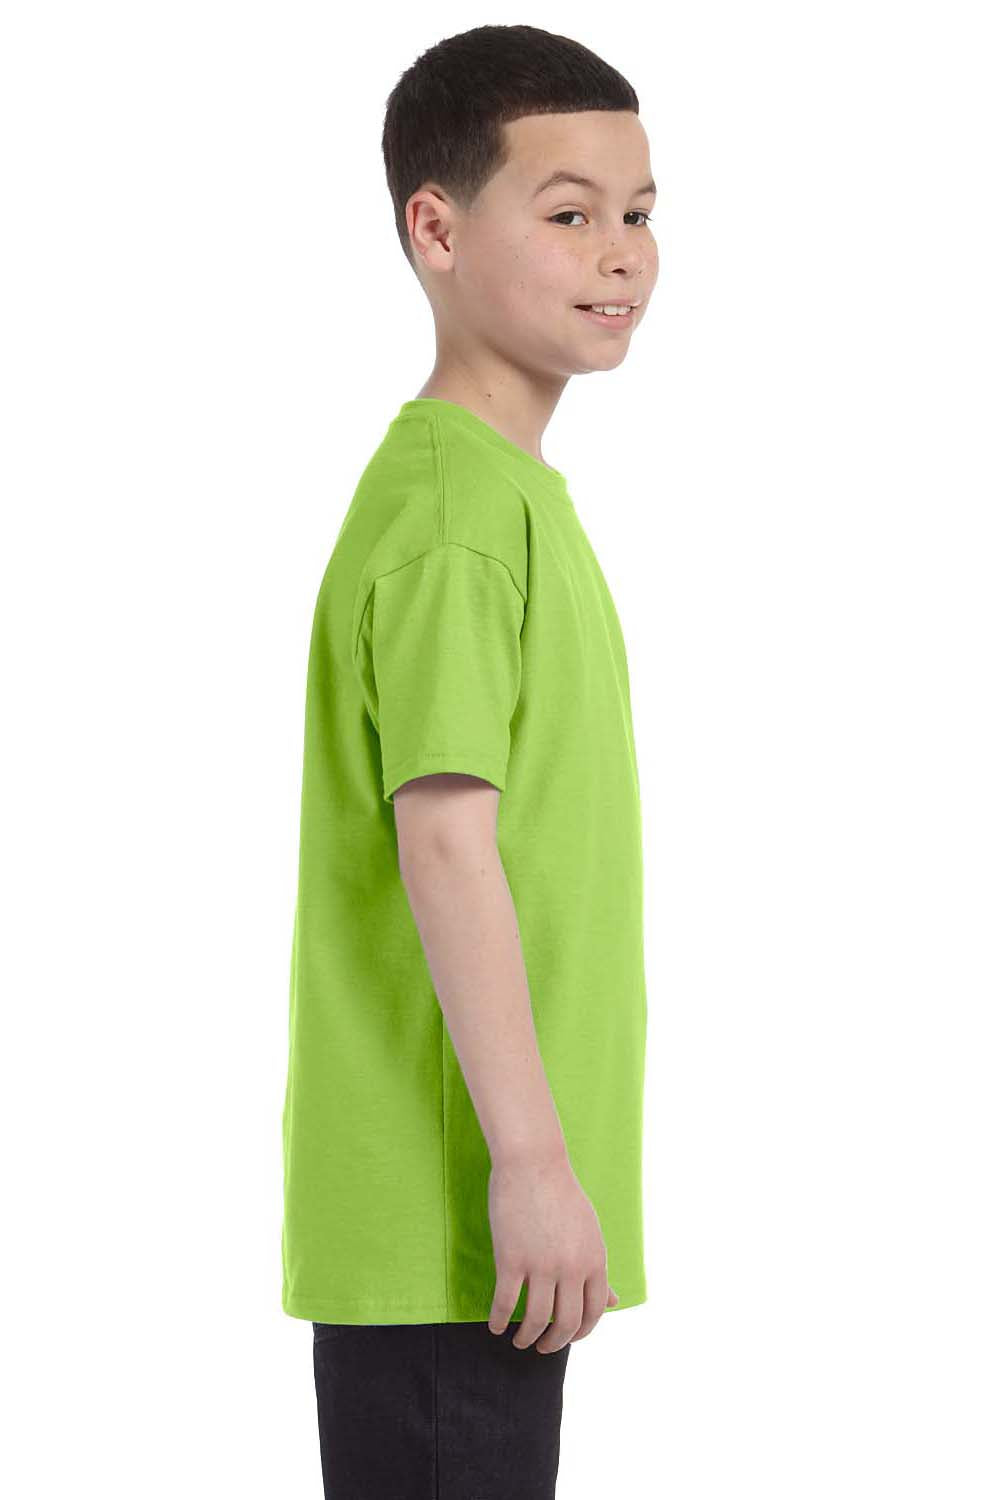 Jerzees 29B Youth Dri-Power Moisture Wicking Short Sleeve Crewneck T-Shirt Neon Green Side